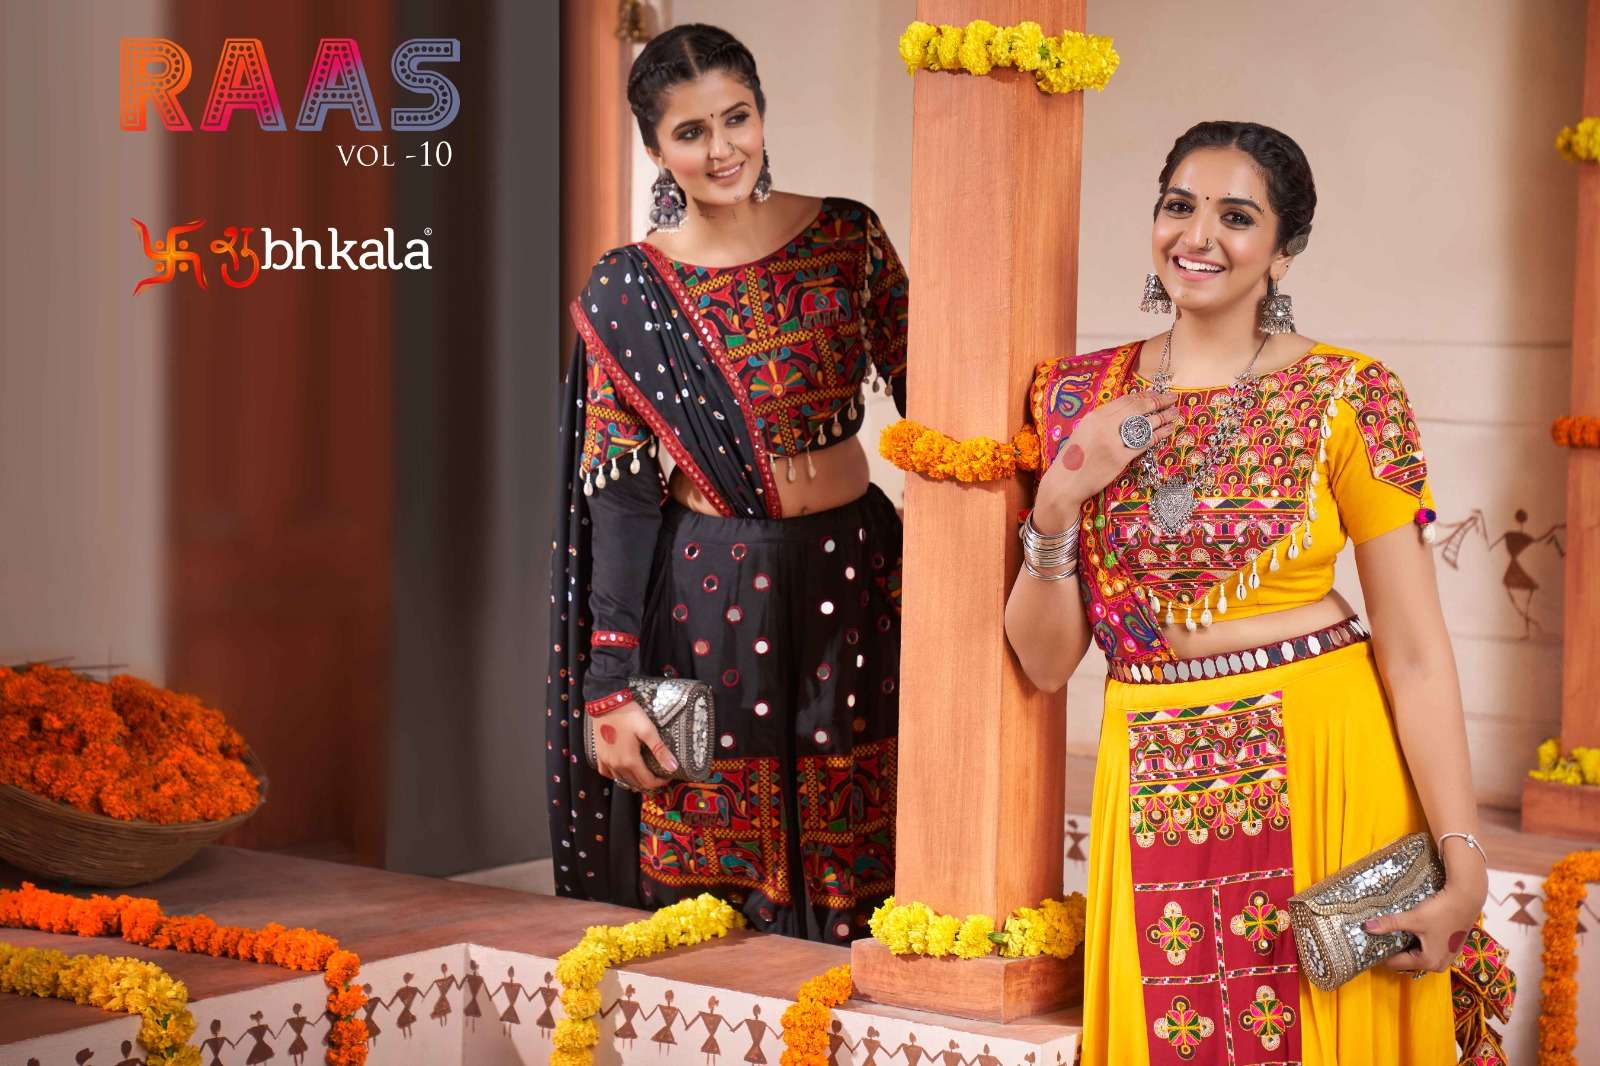 shubhkala raas vol 10 navratri festive wear fullstitched chainya choli